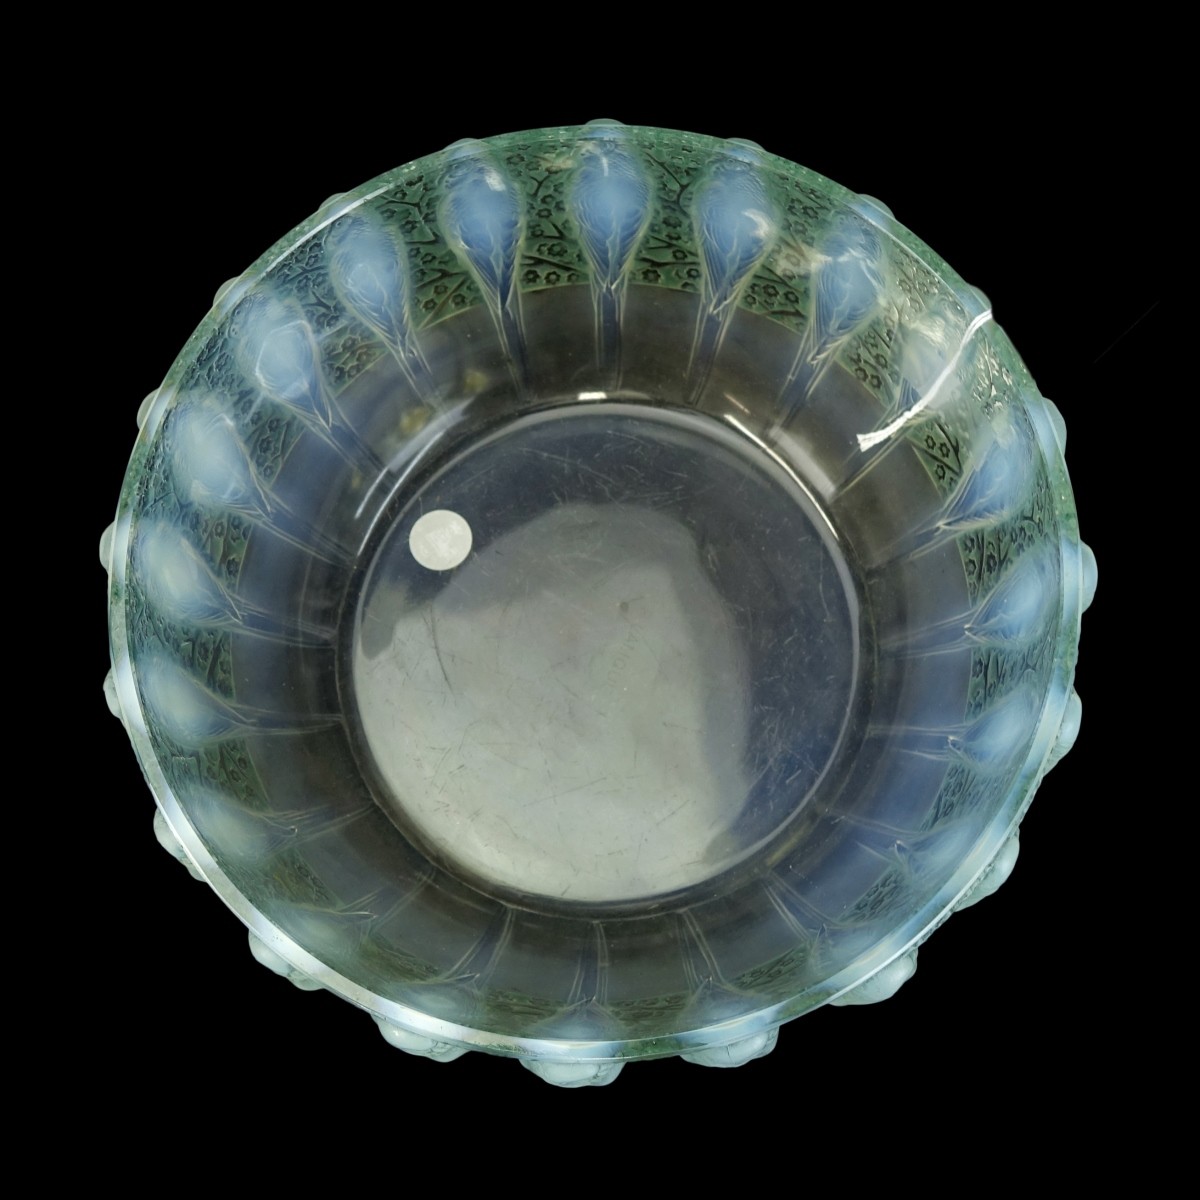 Rene Lalique "Perruches" Bowl